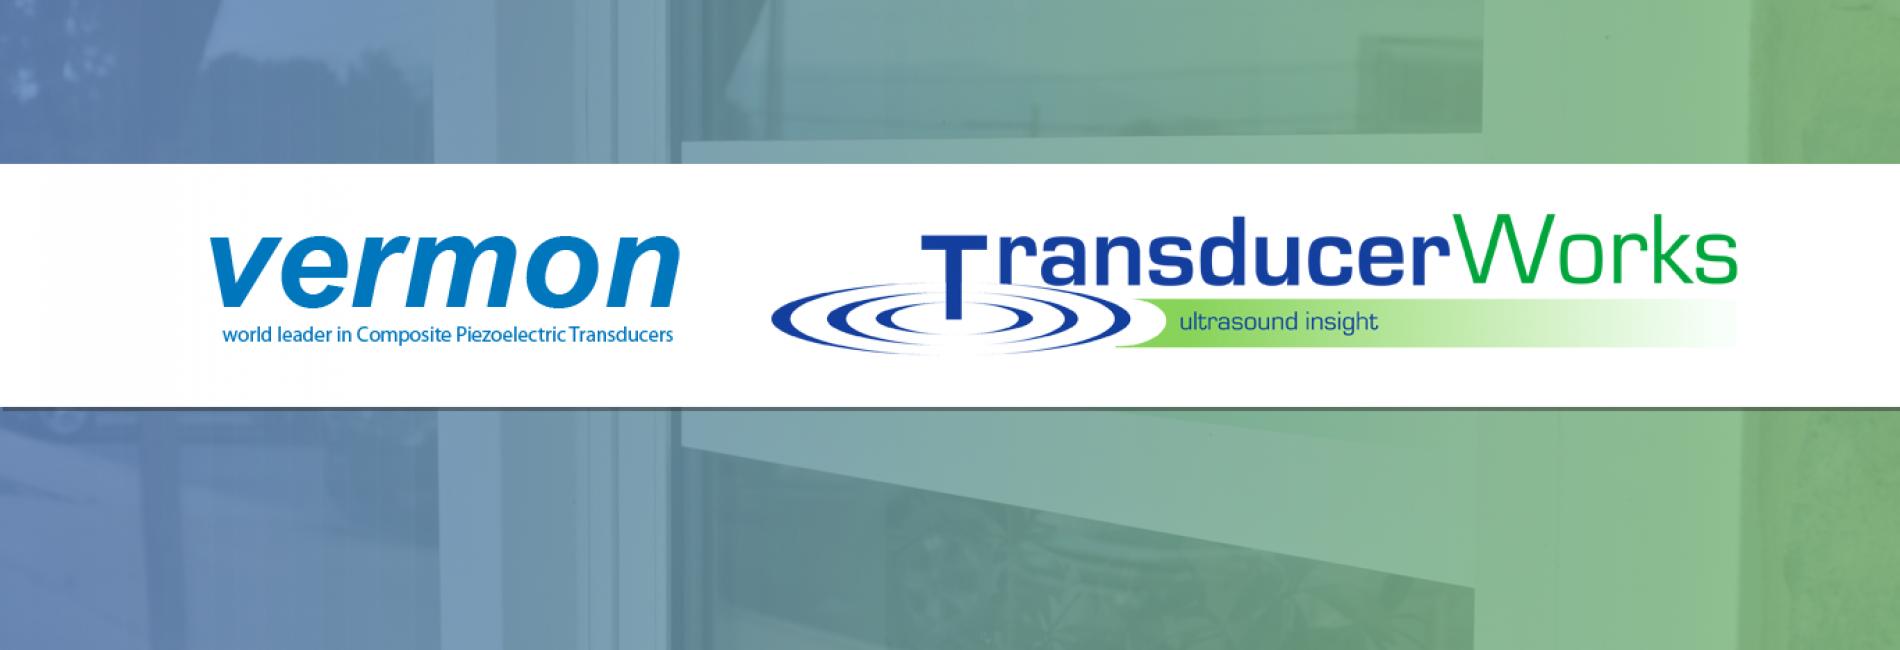 TransducerWorks Announces Strategic Alliance